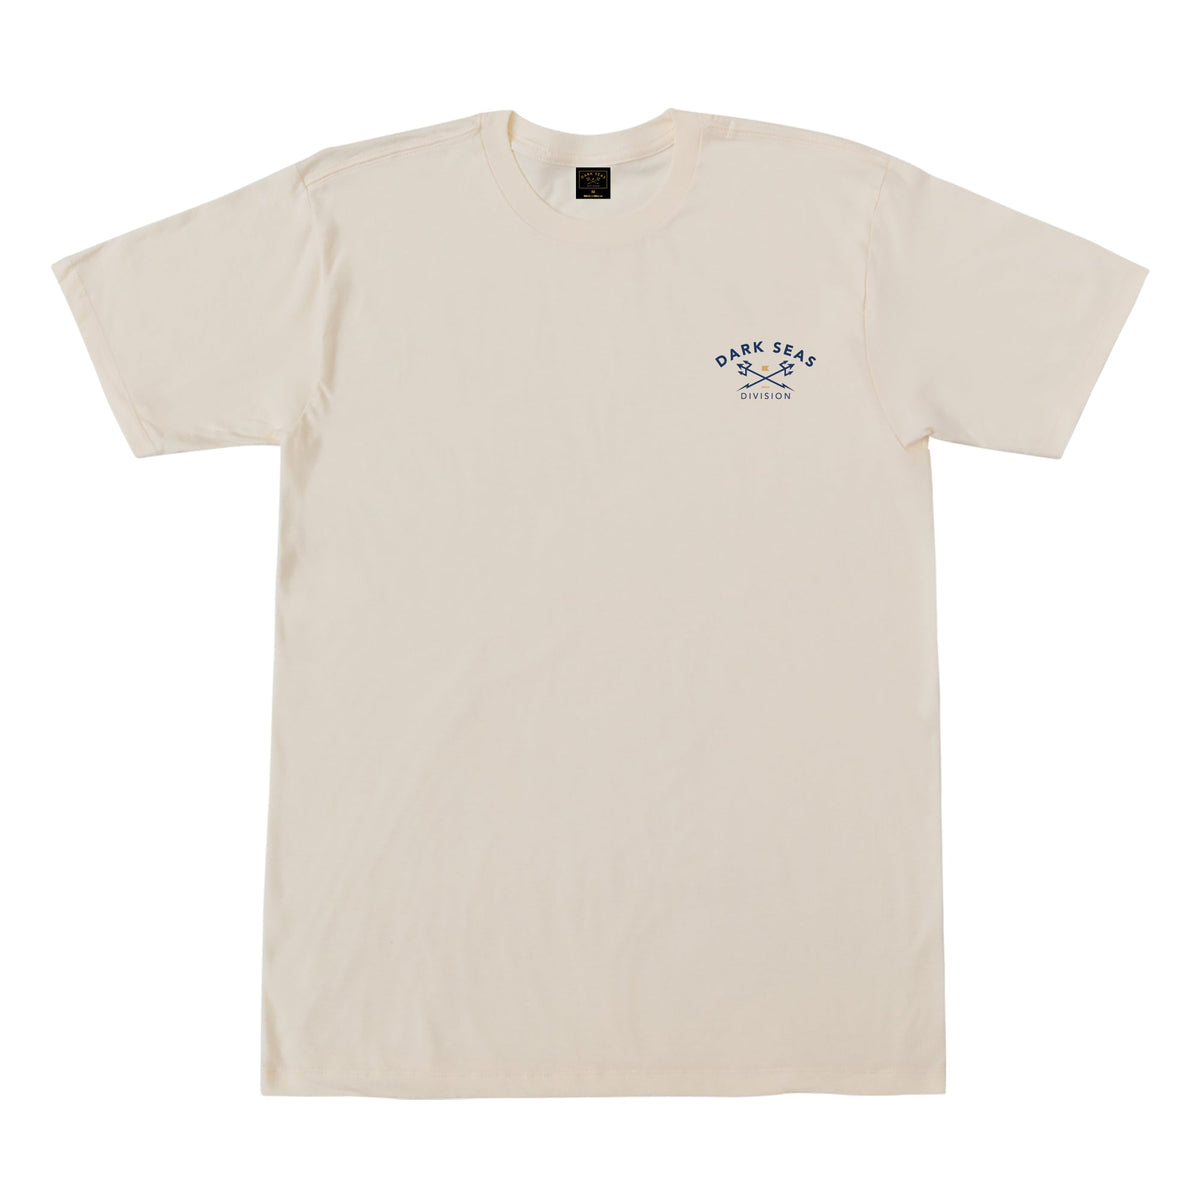 Fisherman Support T-Shirts